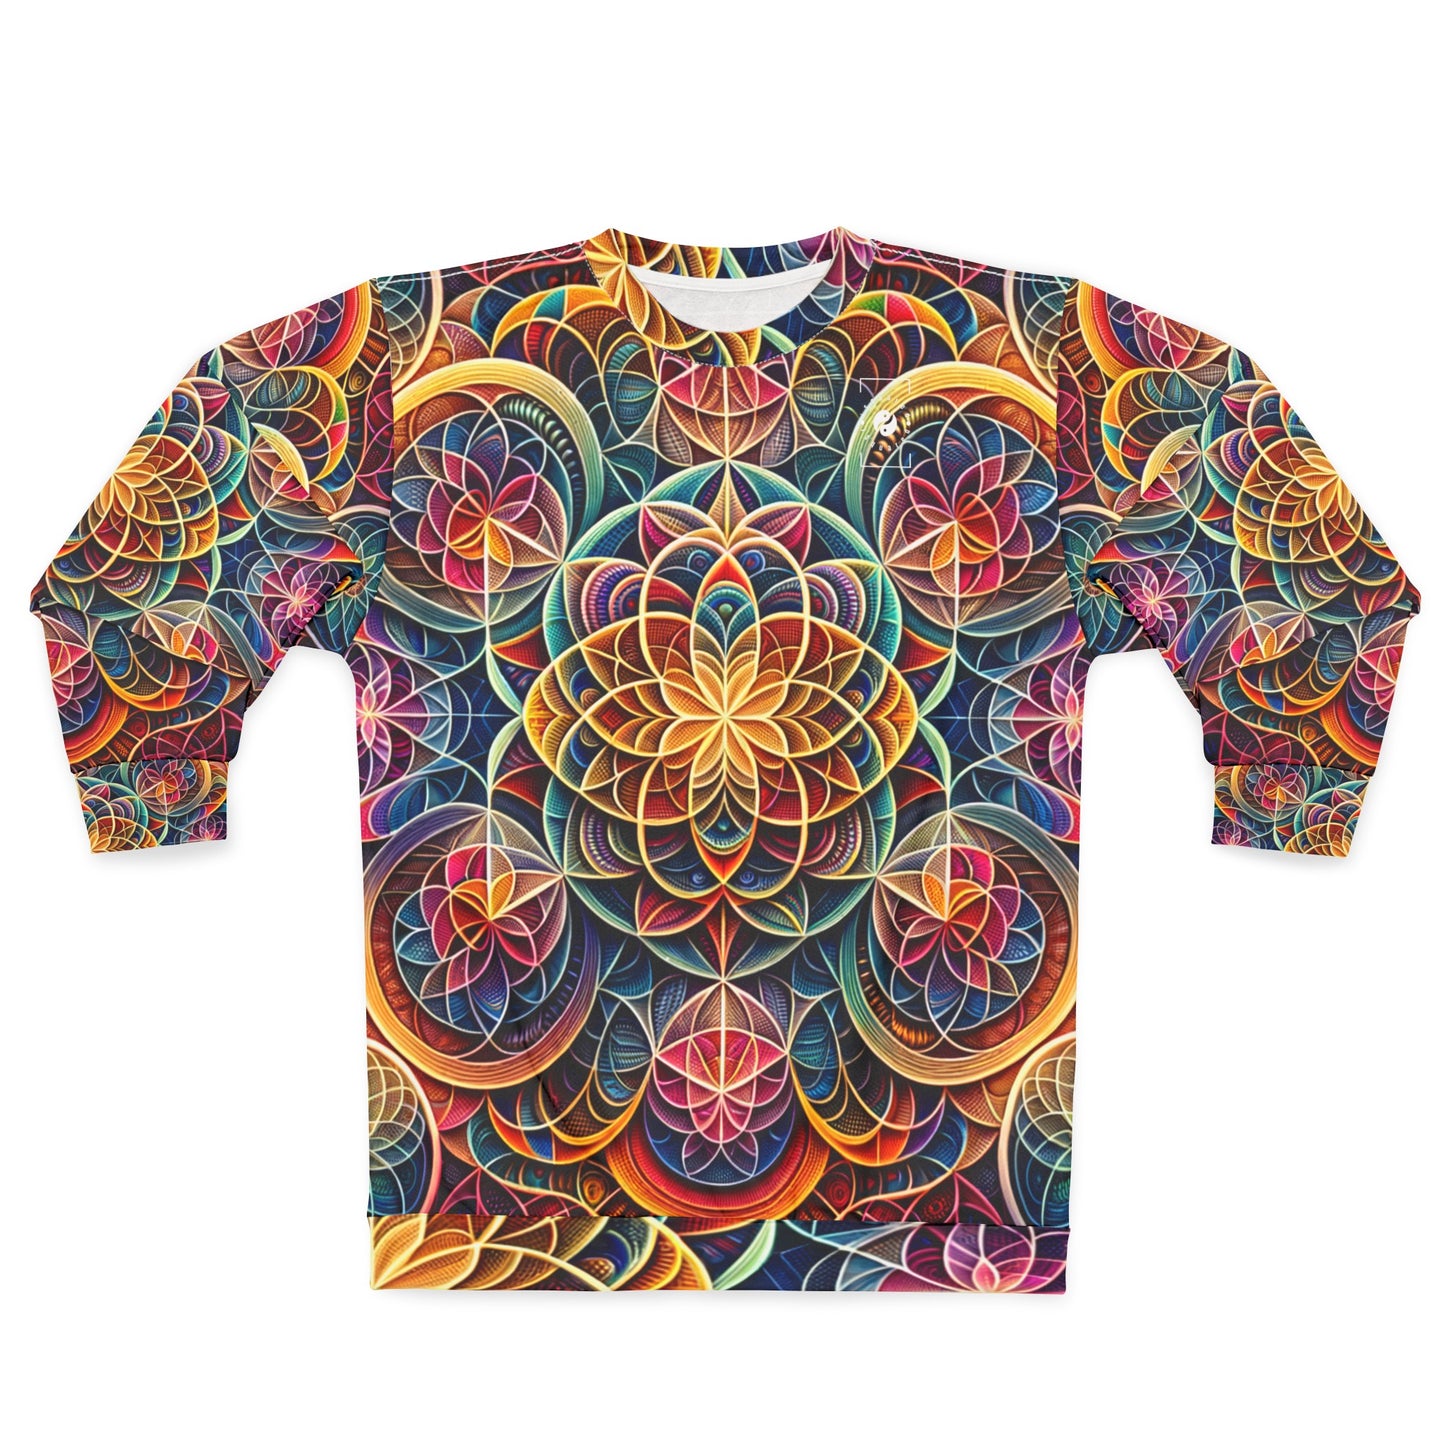 "Sacred Symmetry: Infinite Radiance of Love" - Unisex Sweatshirt